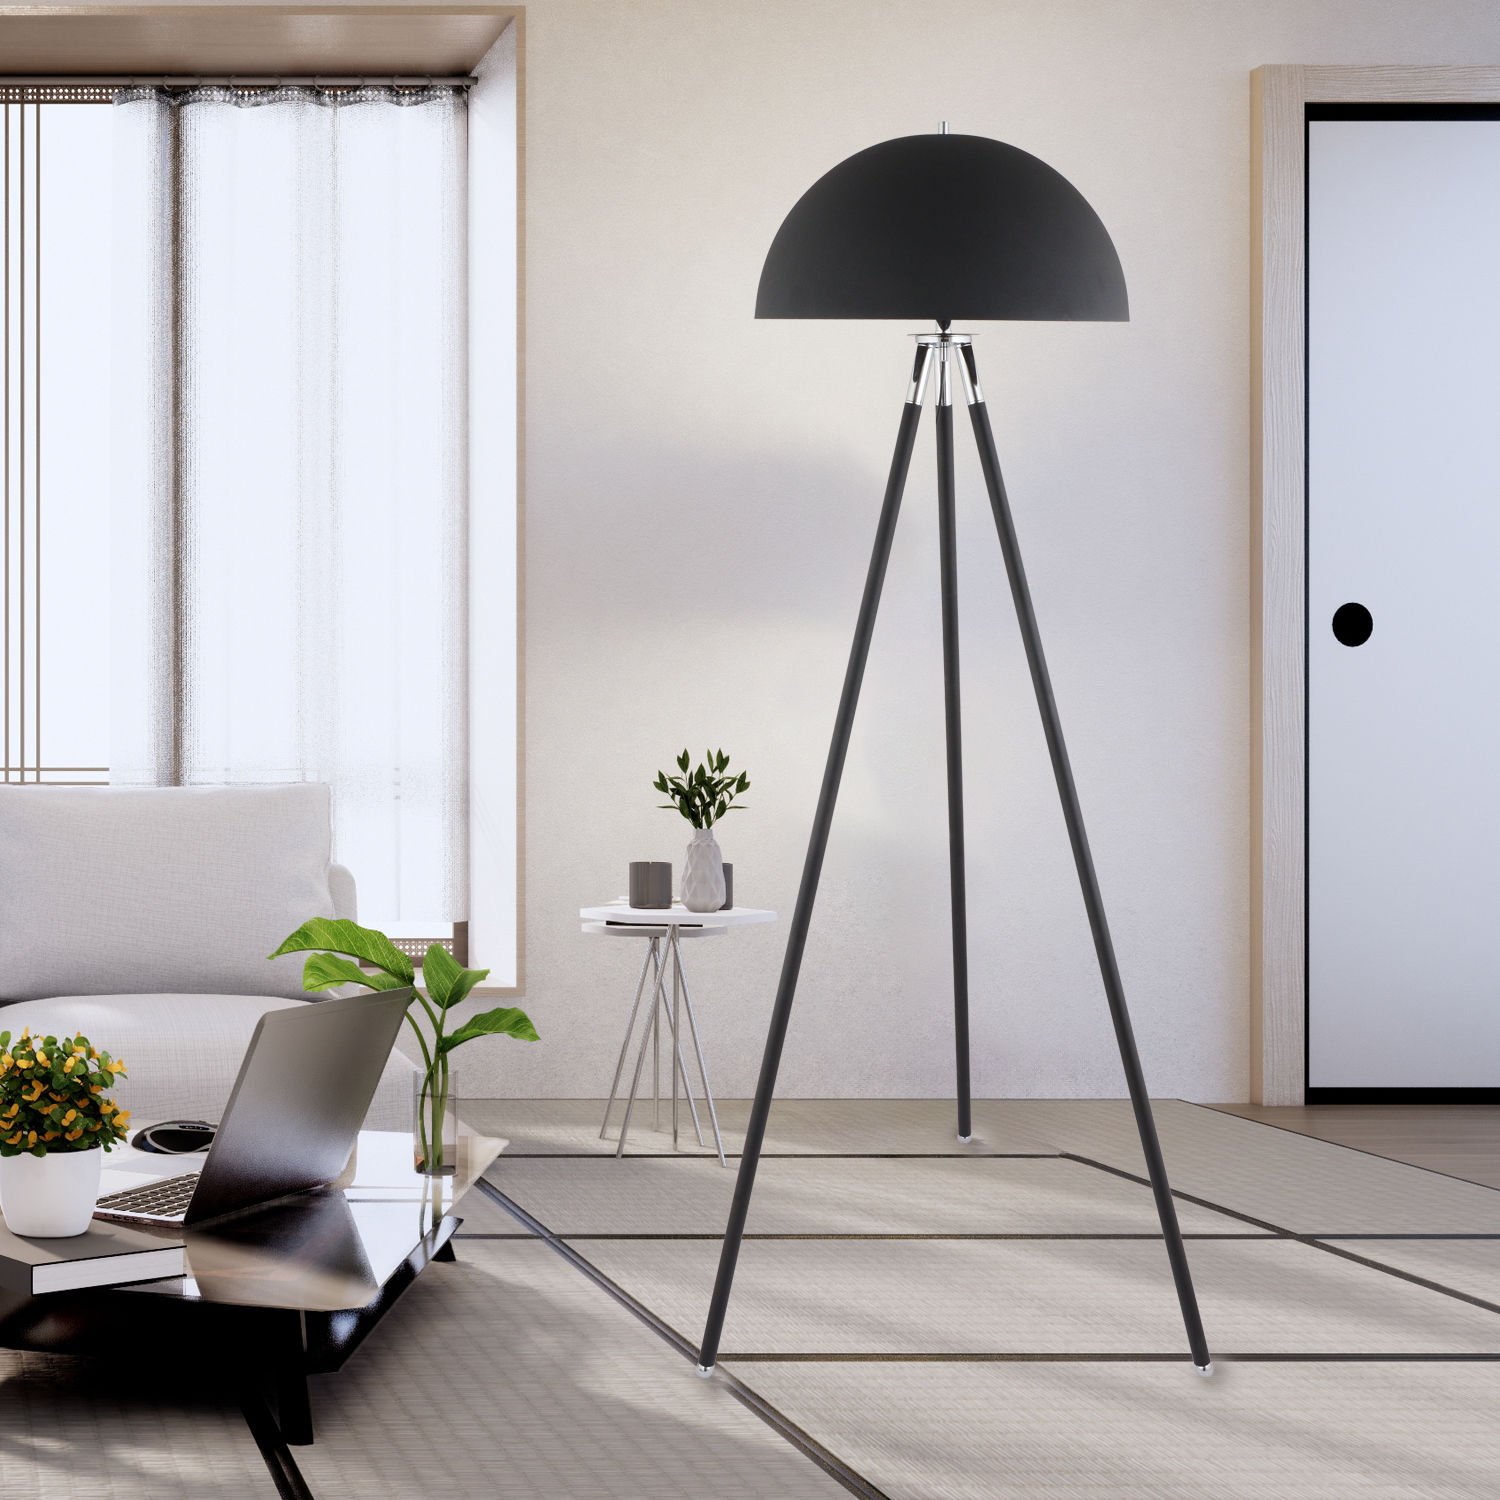 Grant Siyah Krom 3 Ayaklı Modern Tasarım Köşe Ofis, Salon Lambader